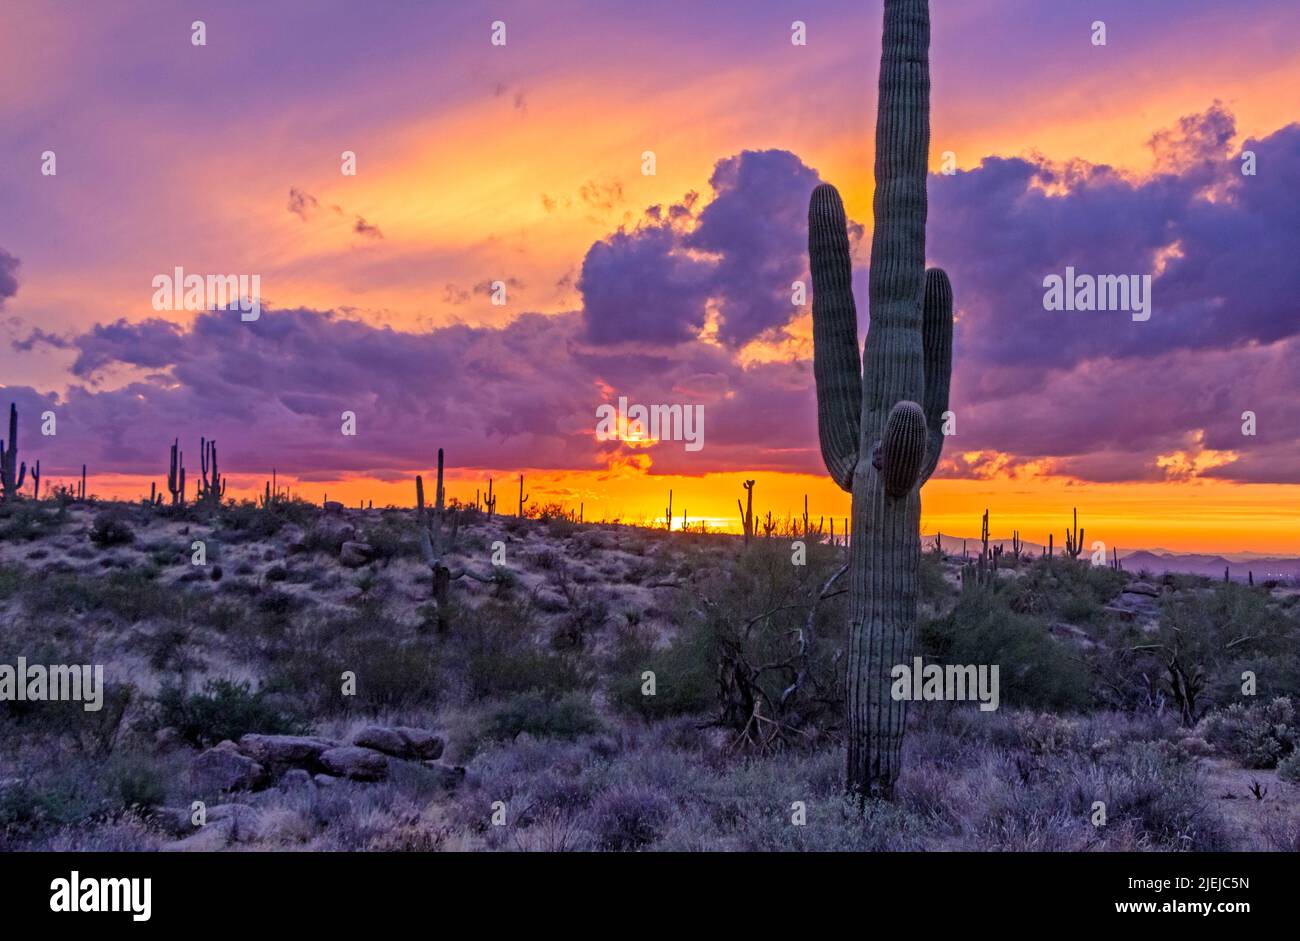 Saguaro Cactus At Sunset Time In Arizona Stock Photo